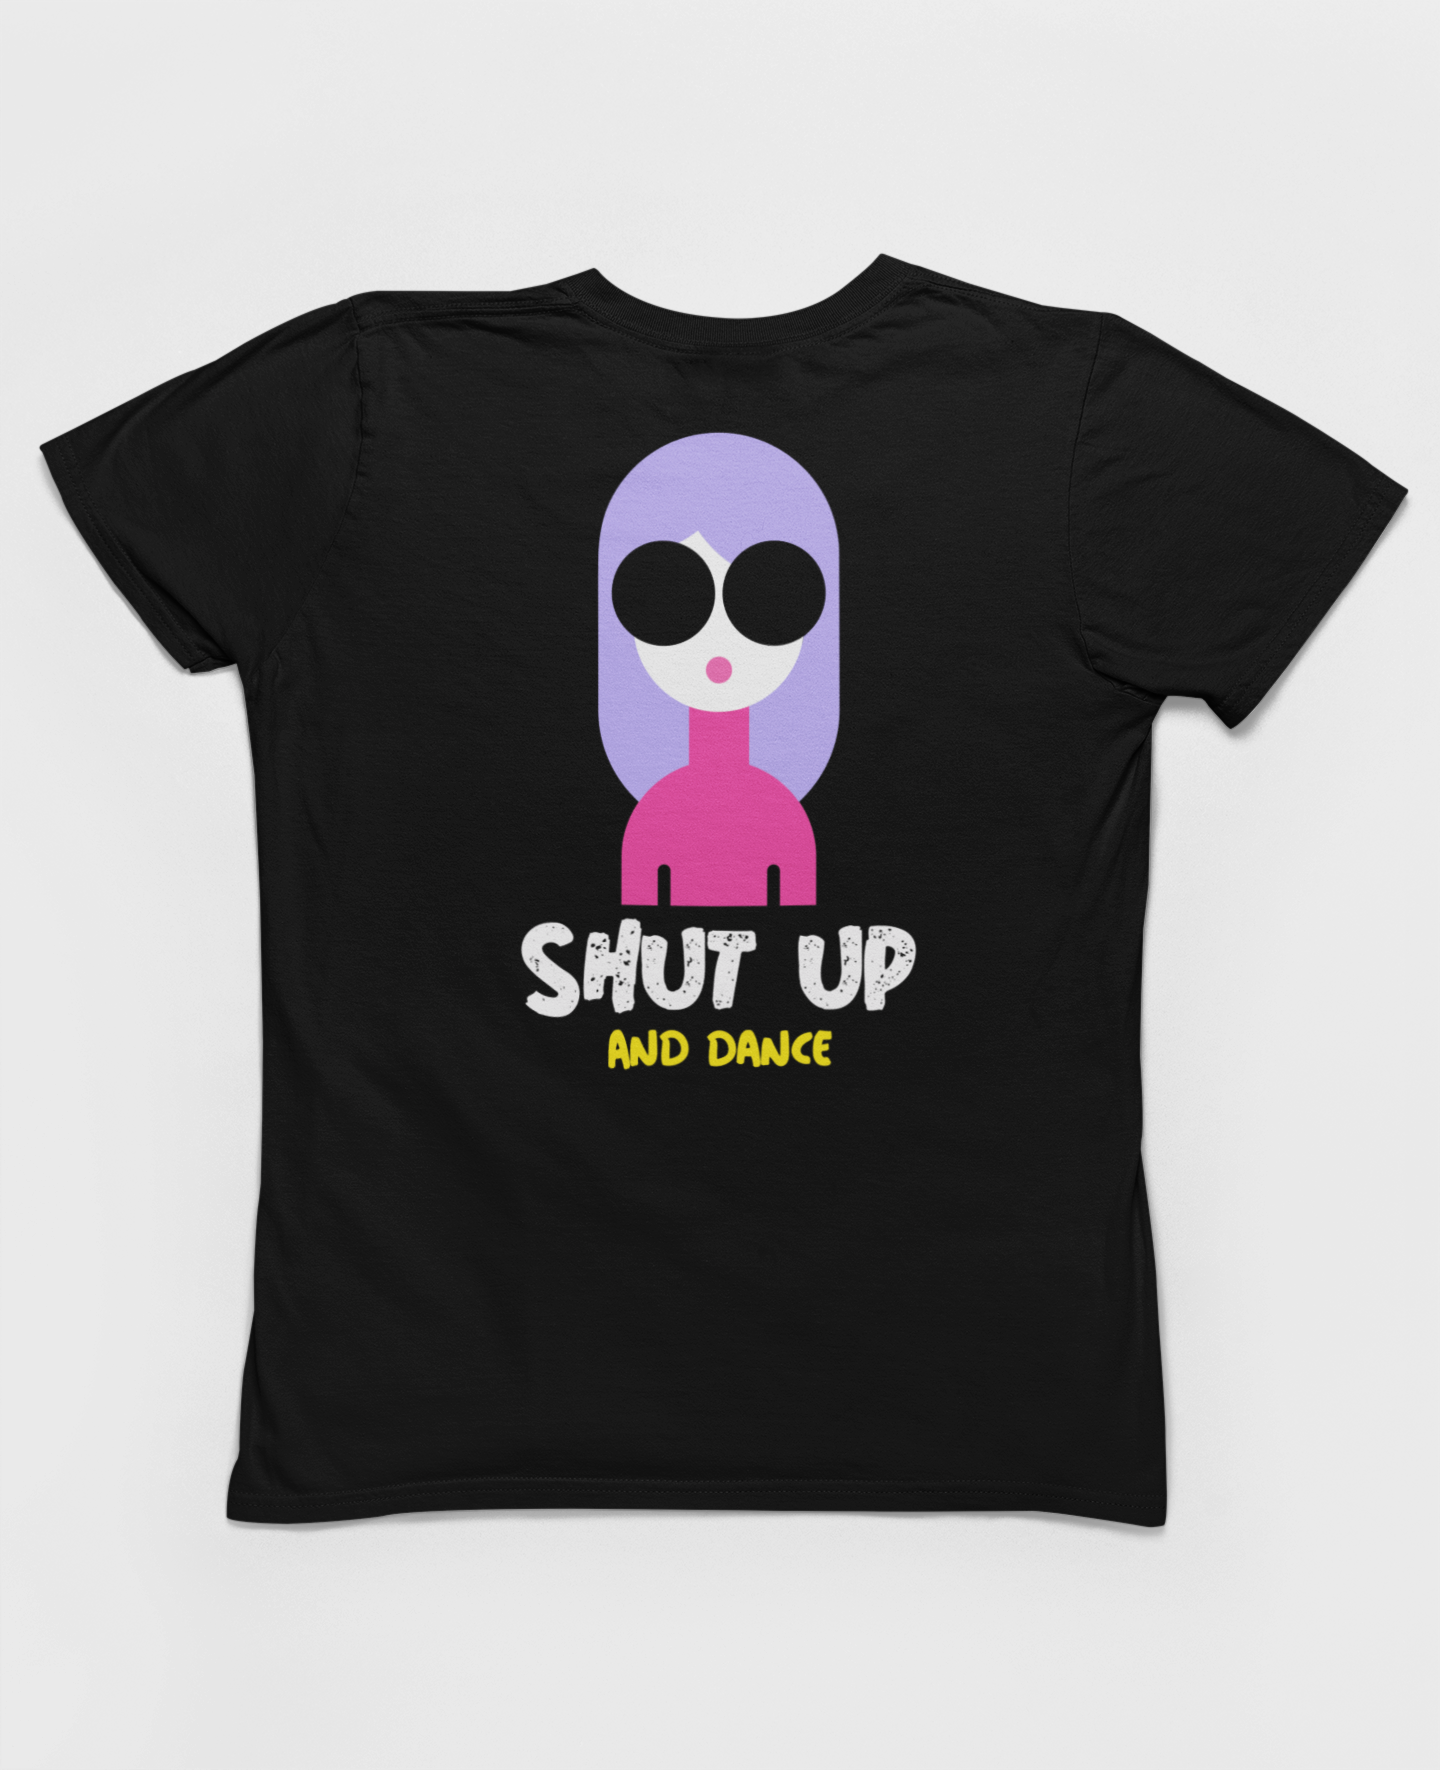 Shut Up And Dance Black Round Neck T-Shirt for Women. 